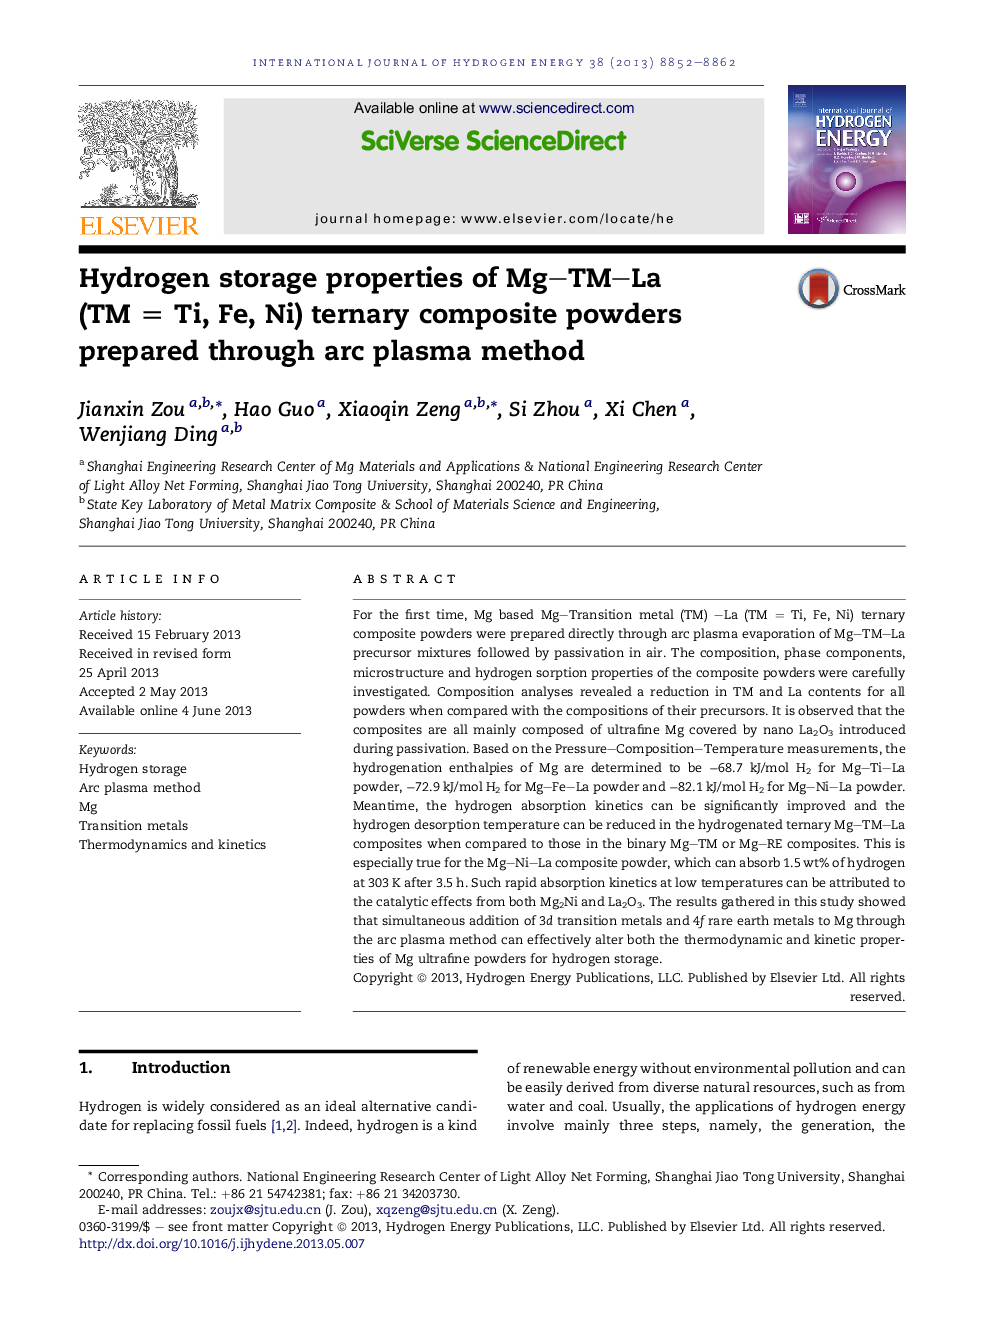 Hydrogen storage properties of Mg-TM-La (TMÂ =Â Ti, Fe, Ni) ternary composite powders prepared through arc plasma method